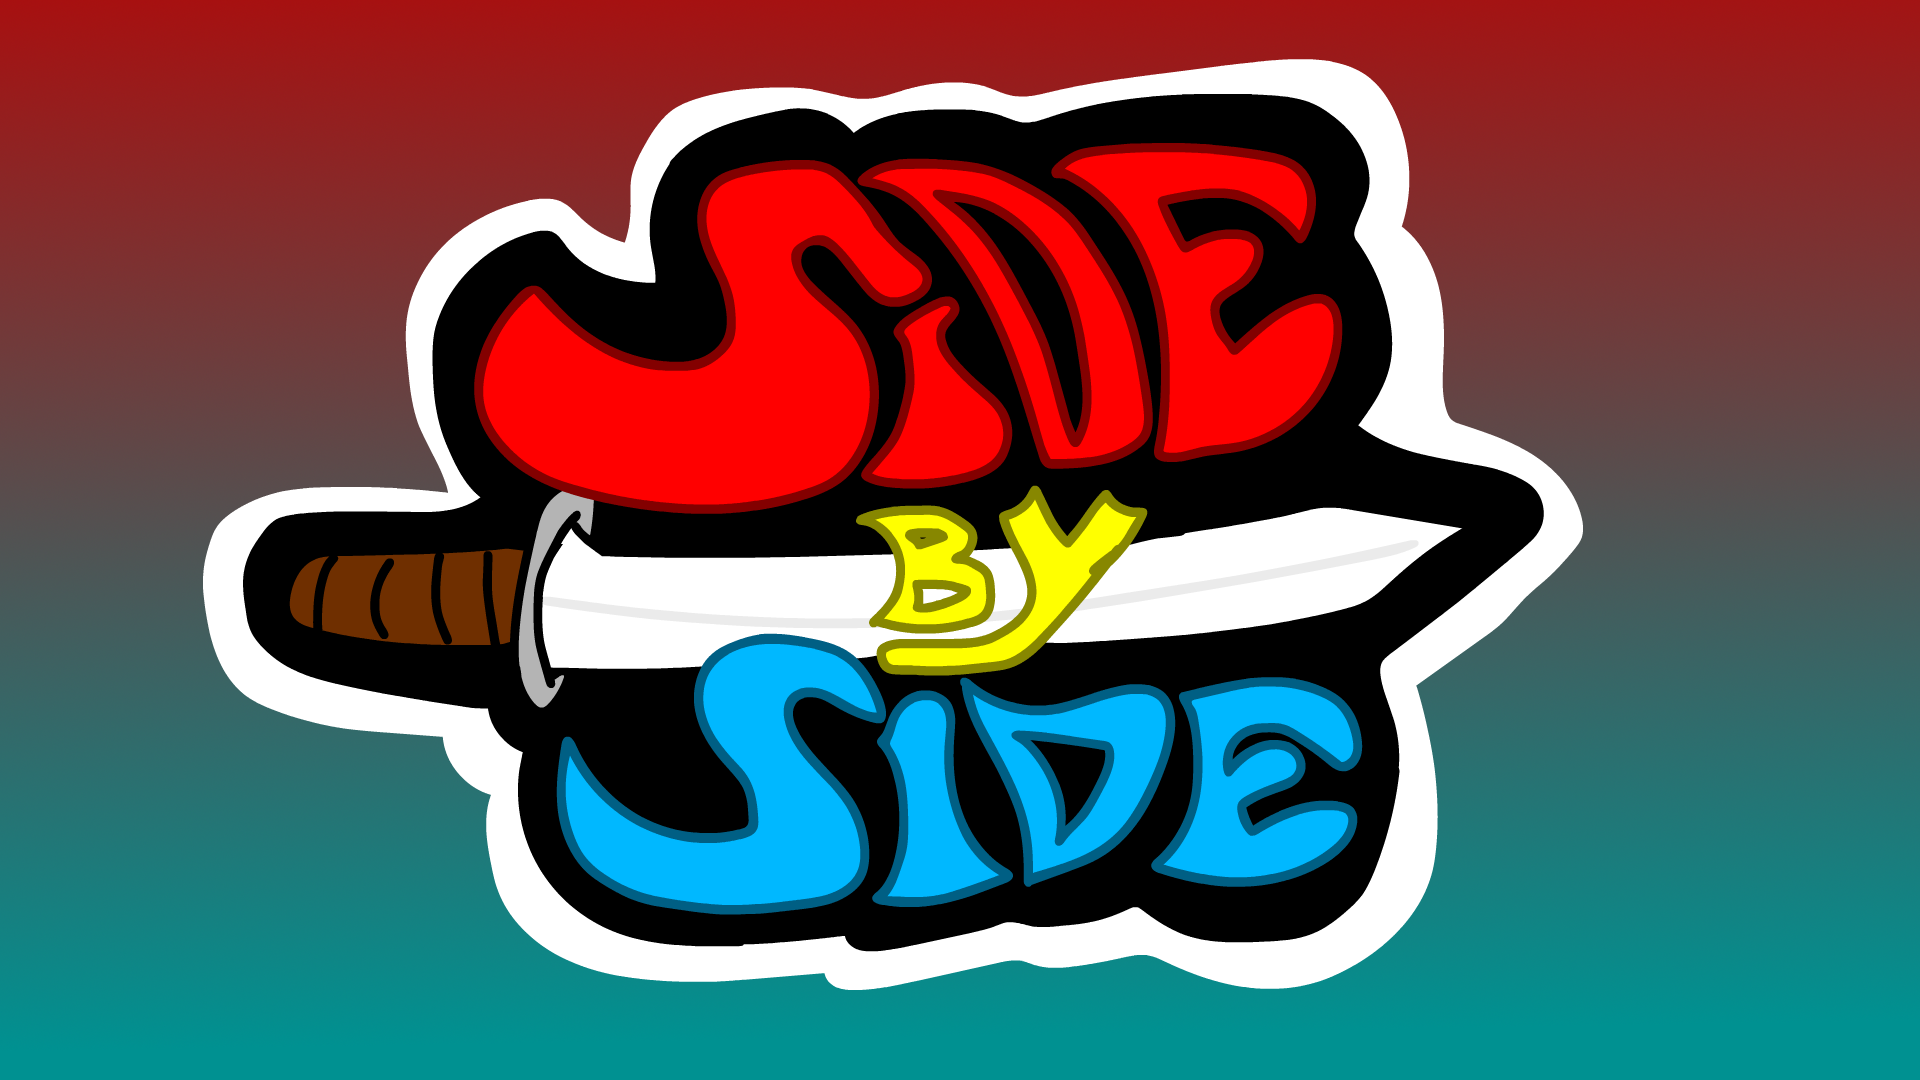 SideBySide (Squares?)